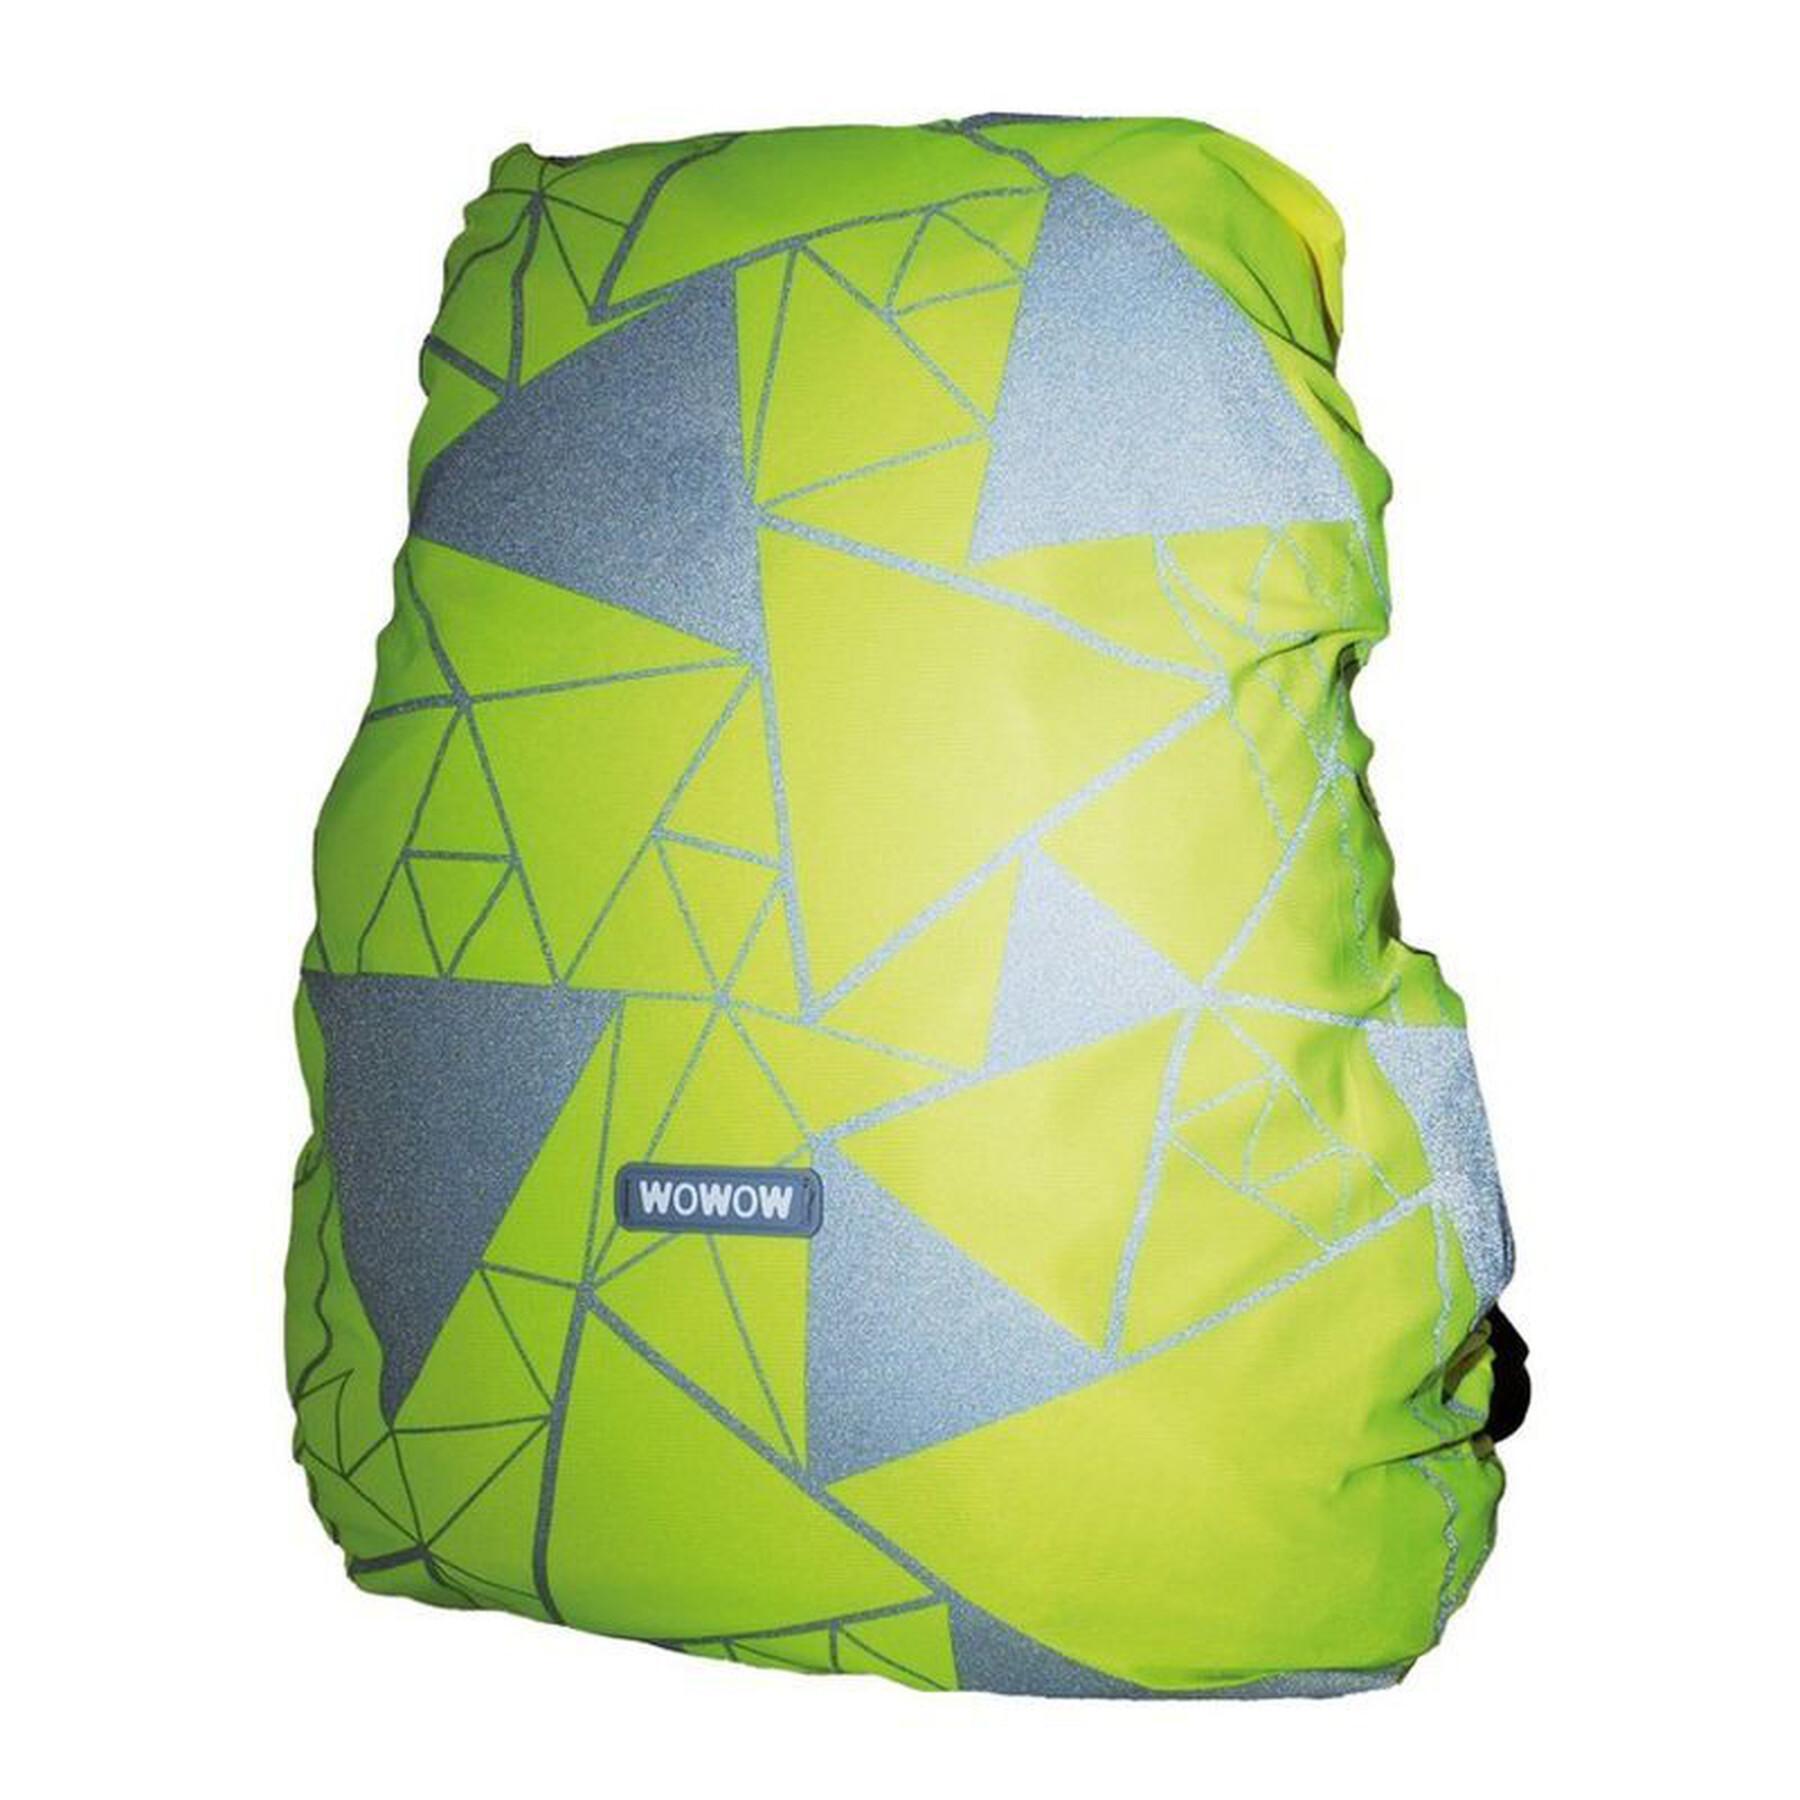 Reflective waterproof backpack cover Wowow Urban